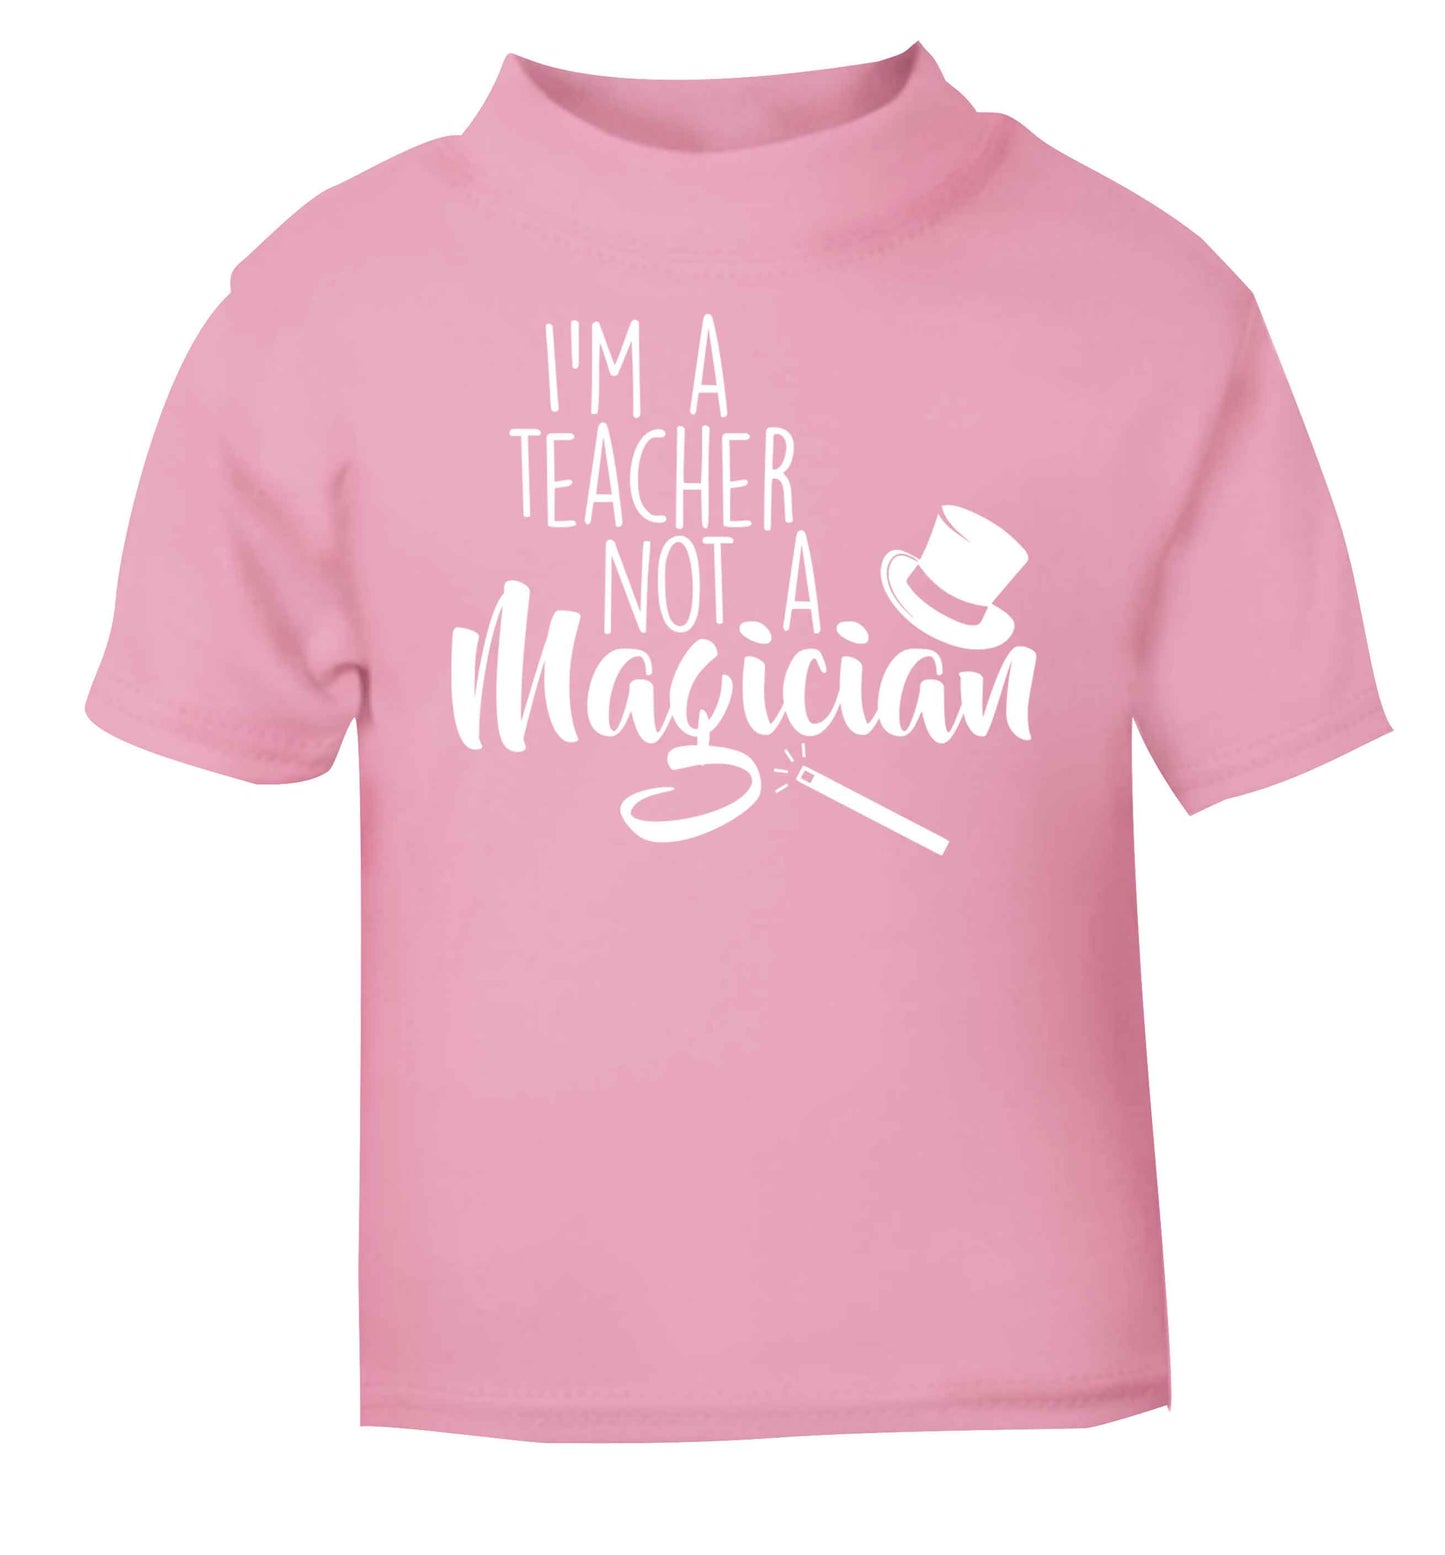 I'm a teacher not a magician light pink baby toddler Tshirt 2 Years